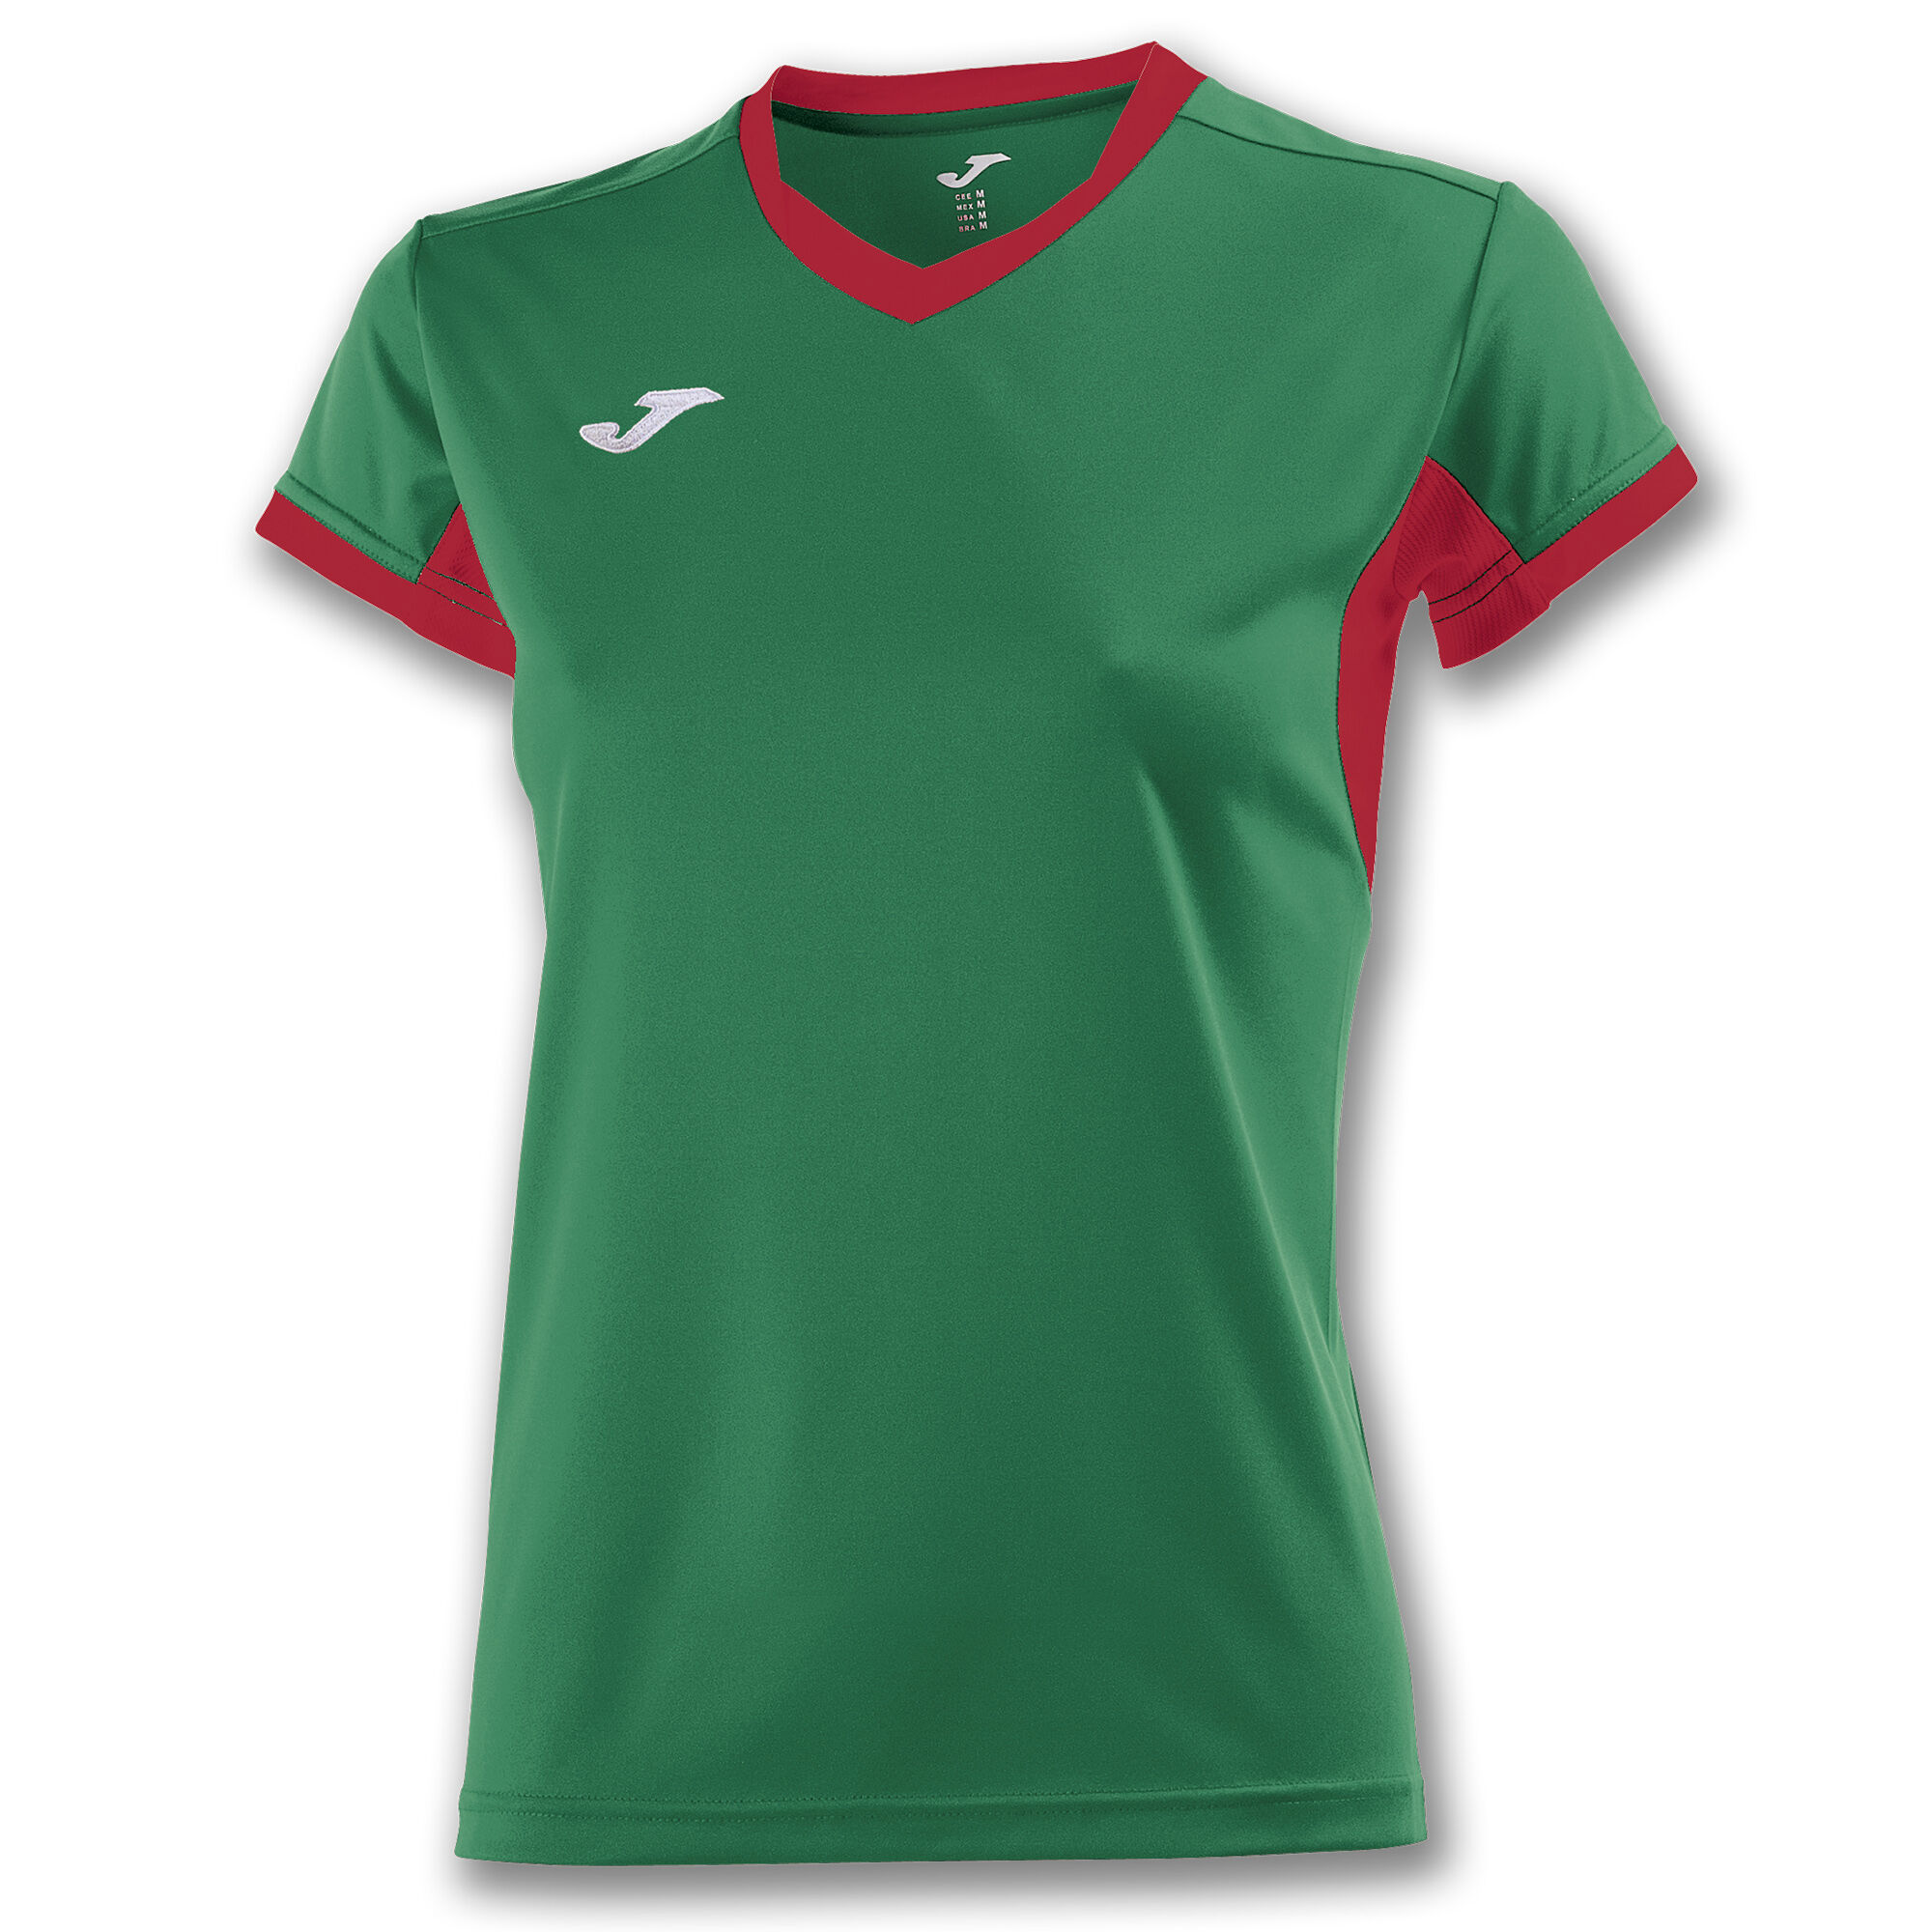 Camiseta manga corta mujer Championship IV verde rojo